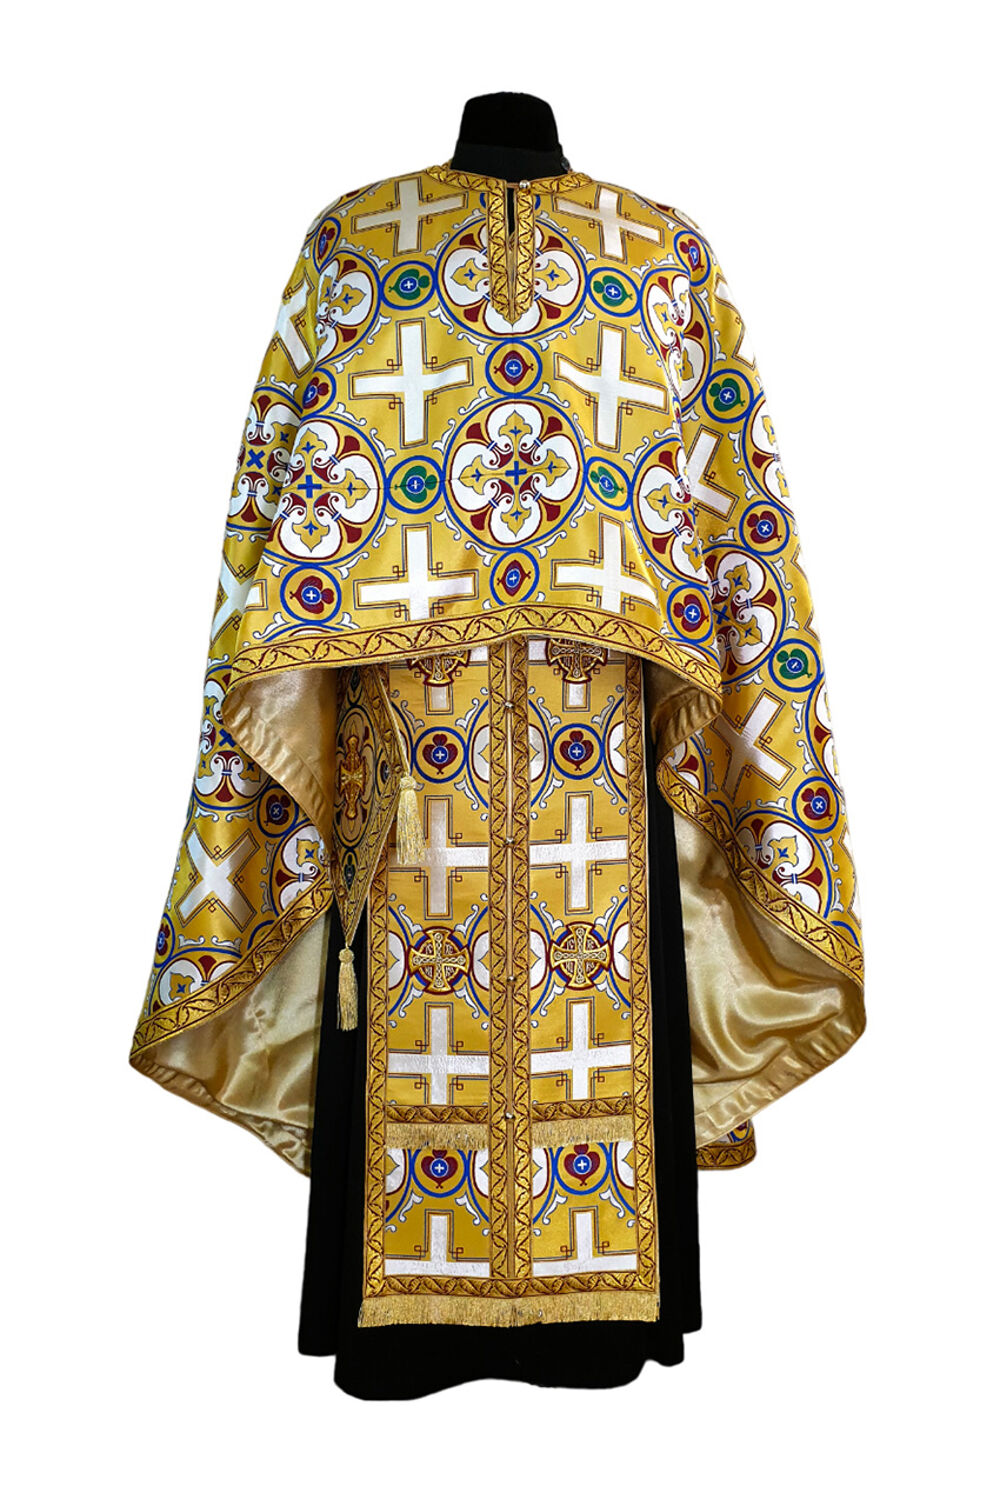 Greek style clergyman vestment